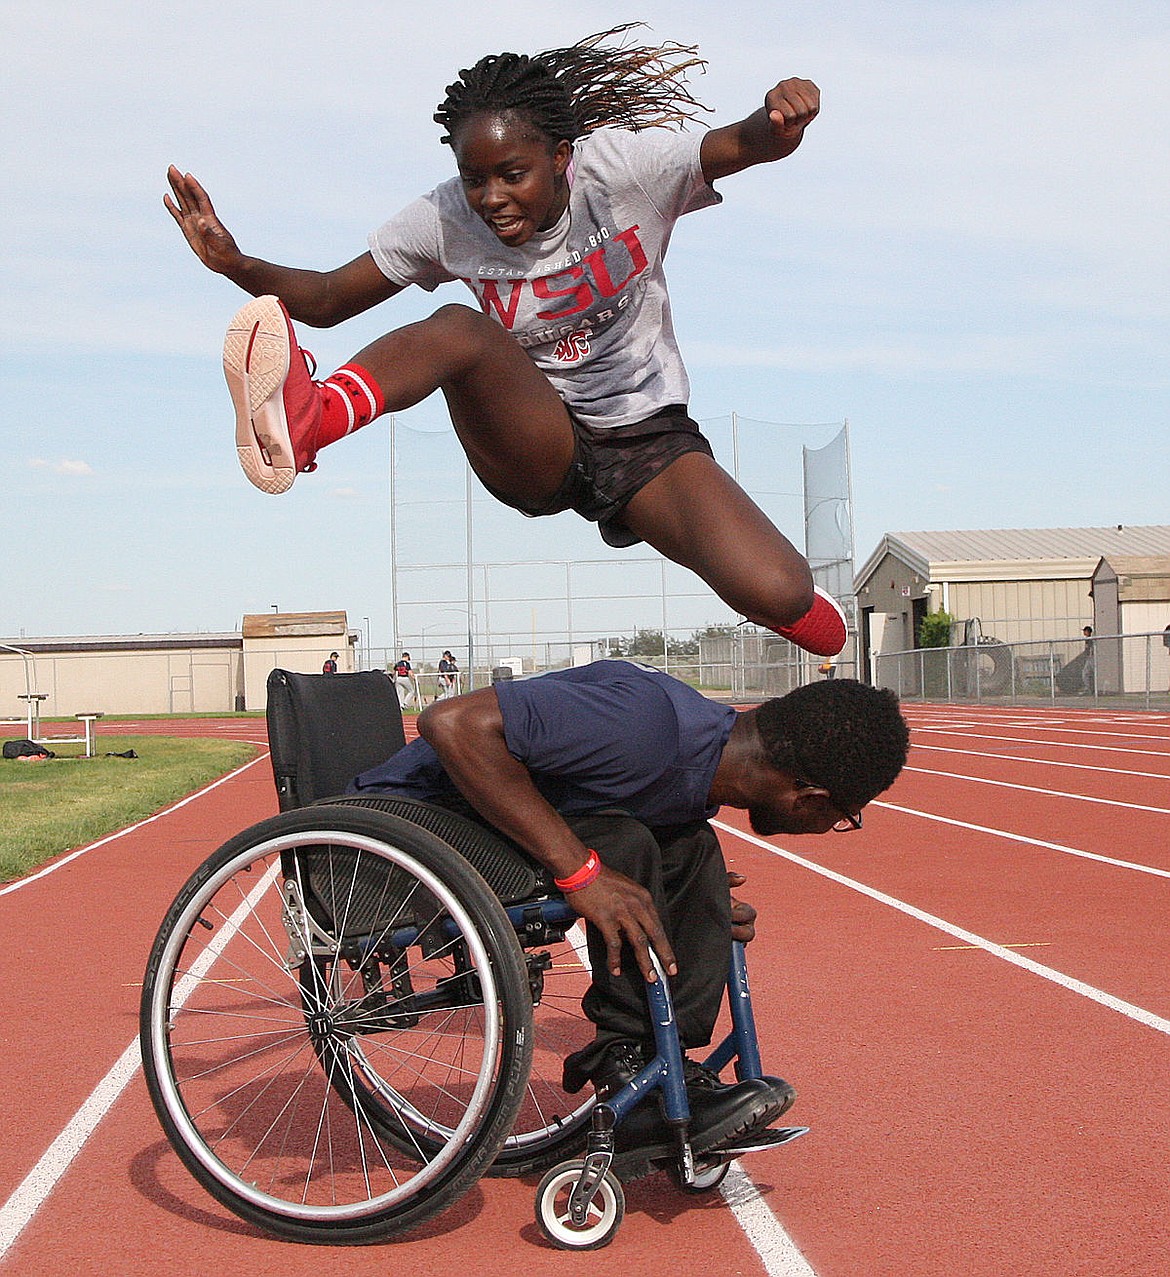 Moses Lake foreign exchange student Abraham Massalay, wheelchair, asked teammate Obi Abonyi to test her skills hurdling him. She&#146;s got skills, he said.